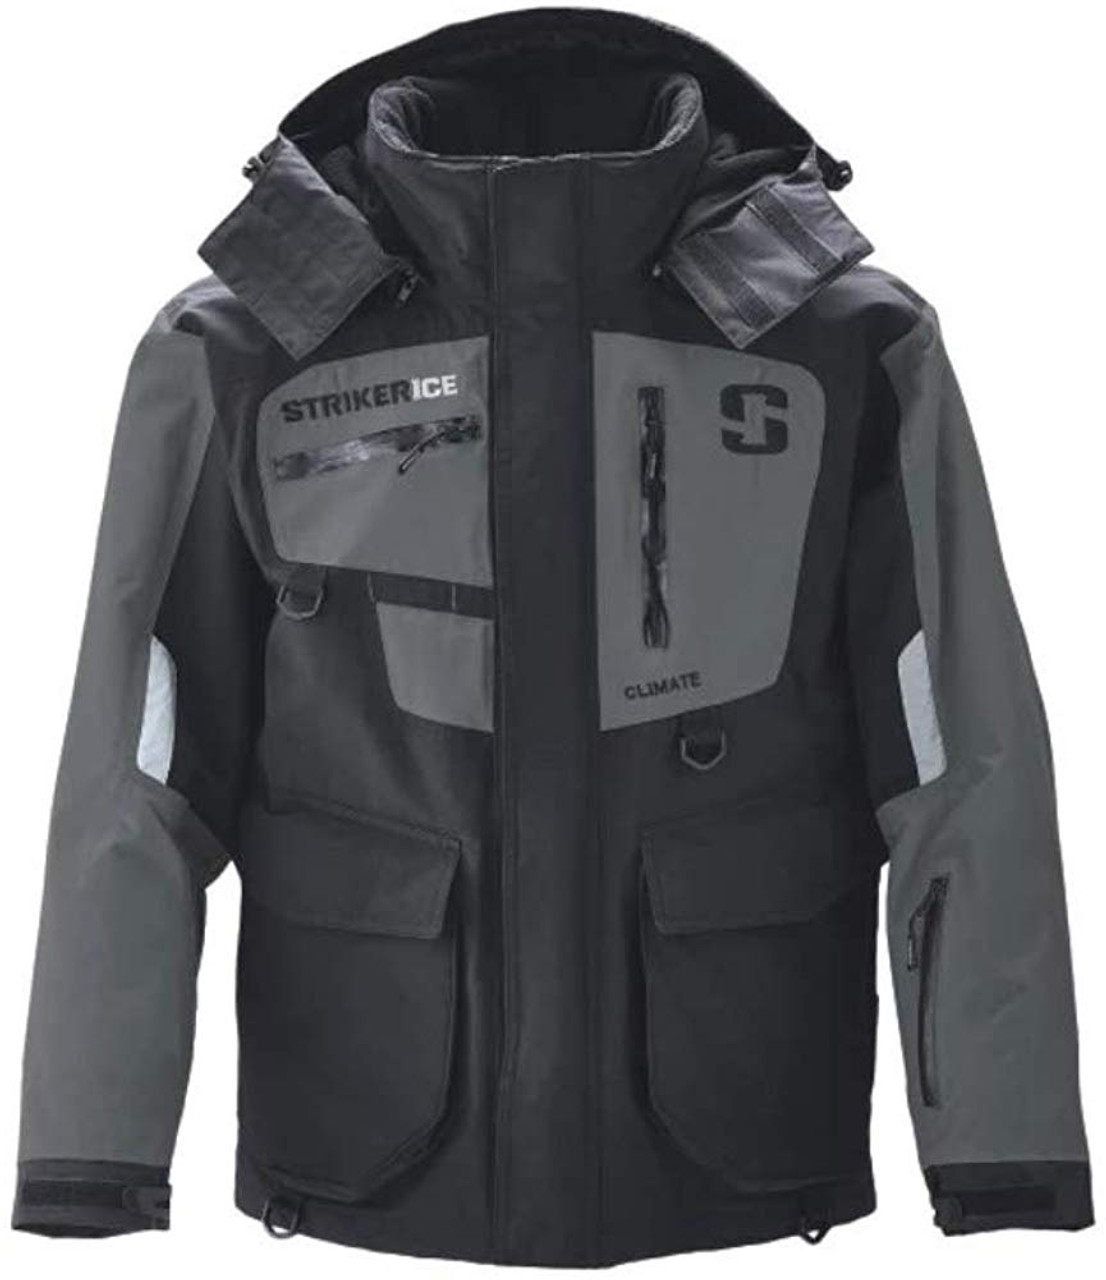 Striker Ice Men's Climate Jacket Black - Gray; 5XL